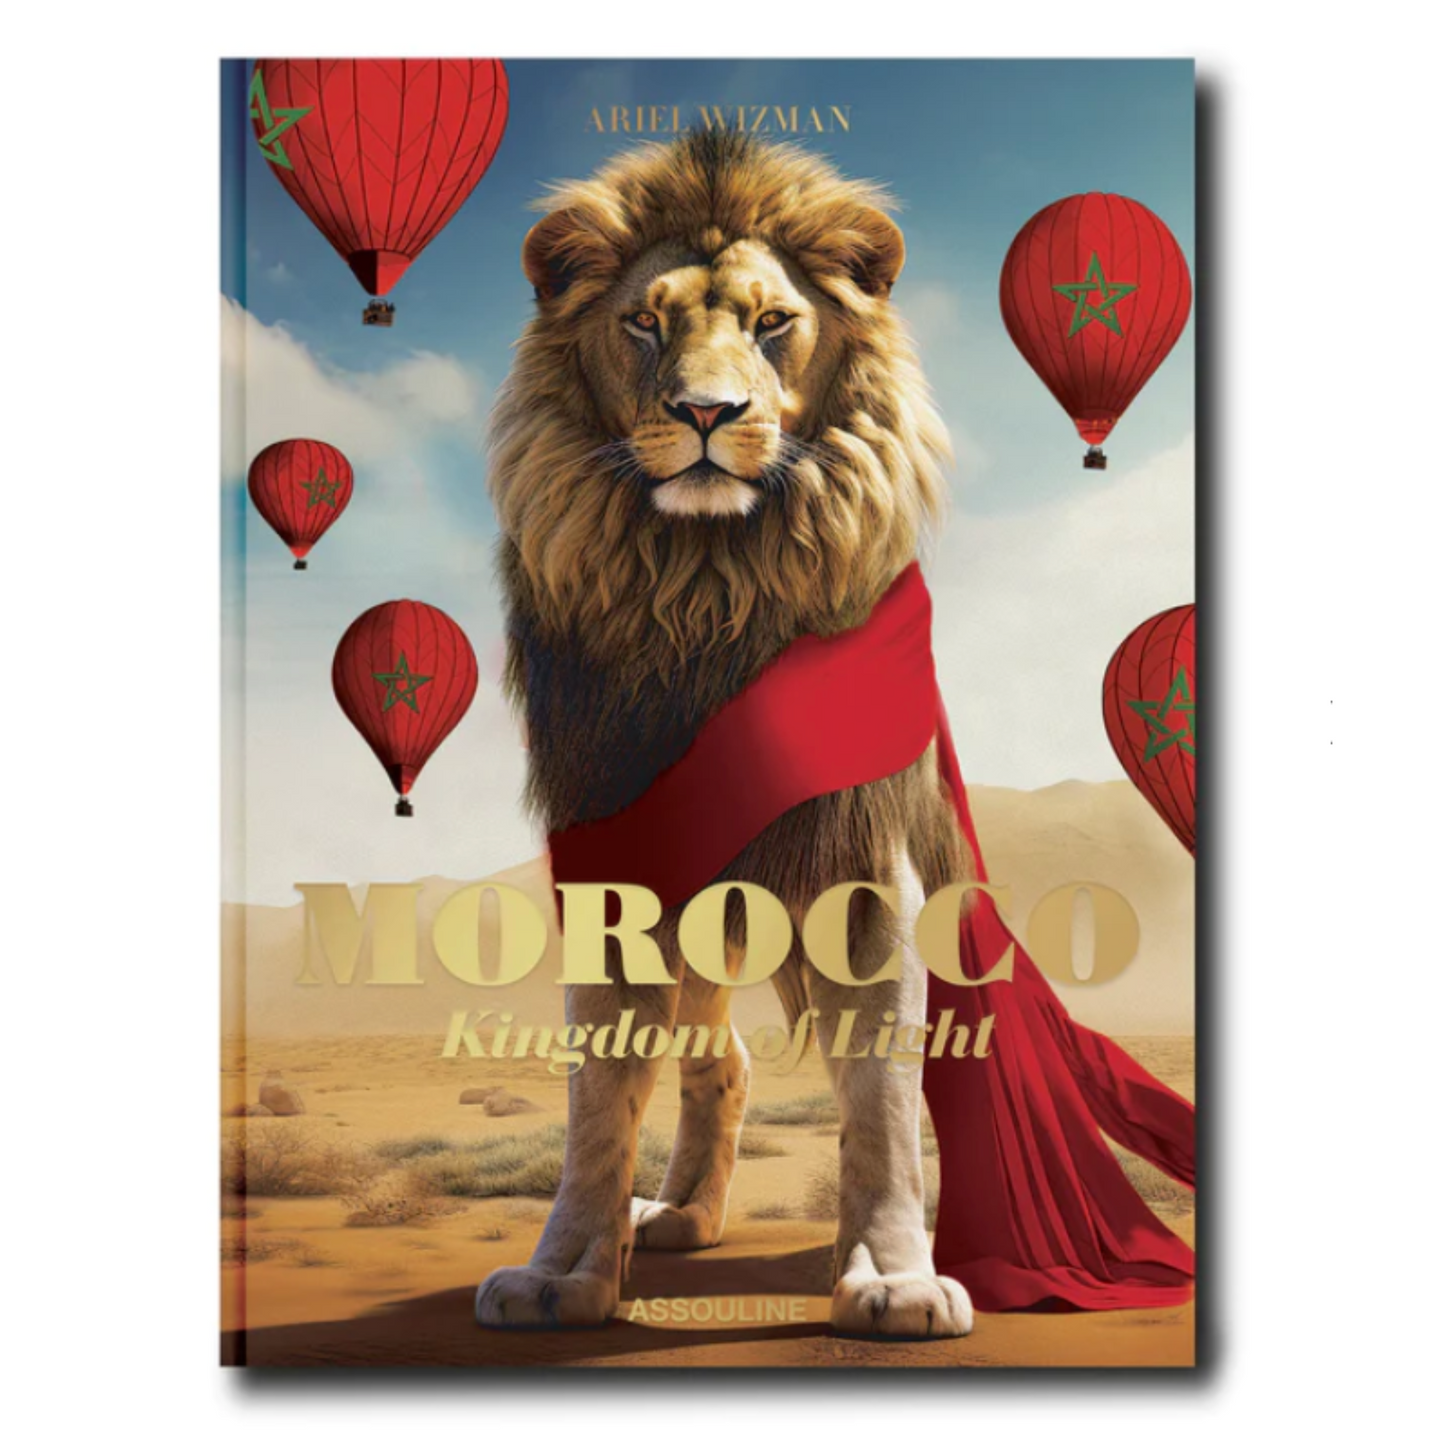 Morroco: Kingdom of Light